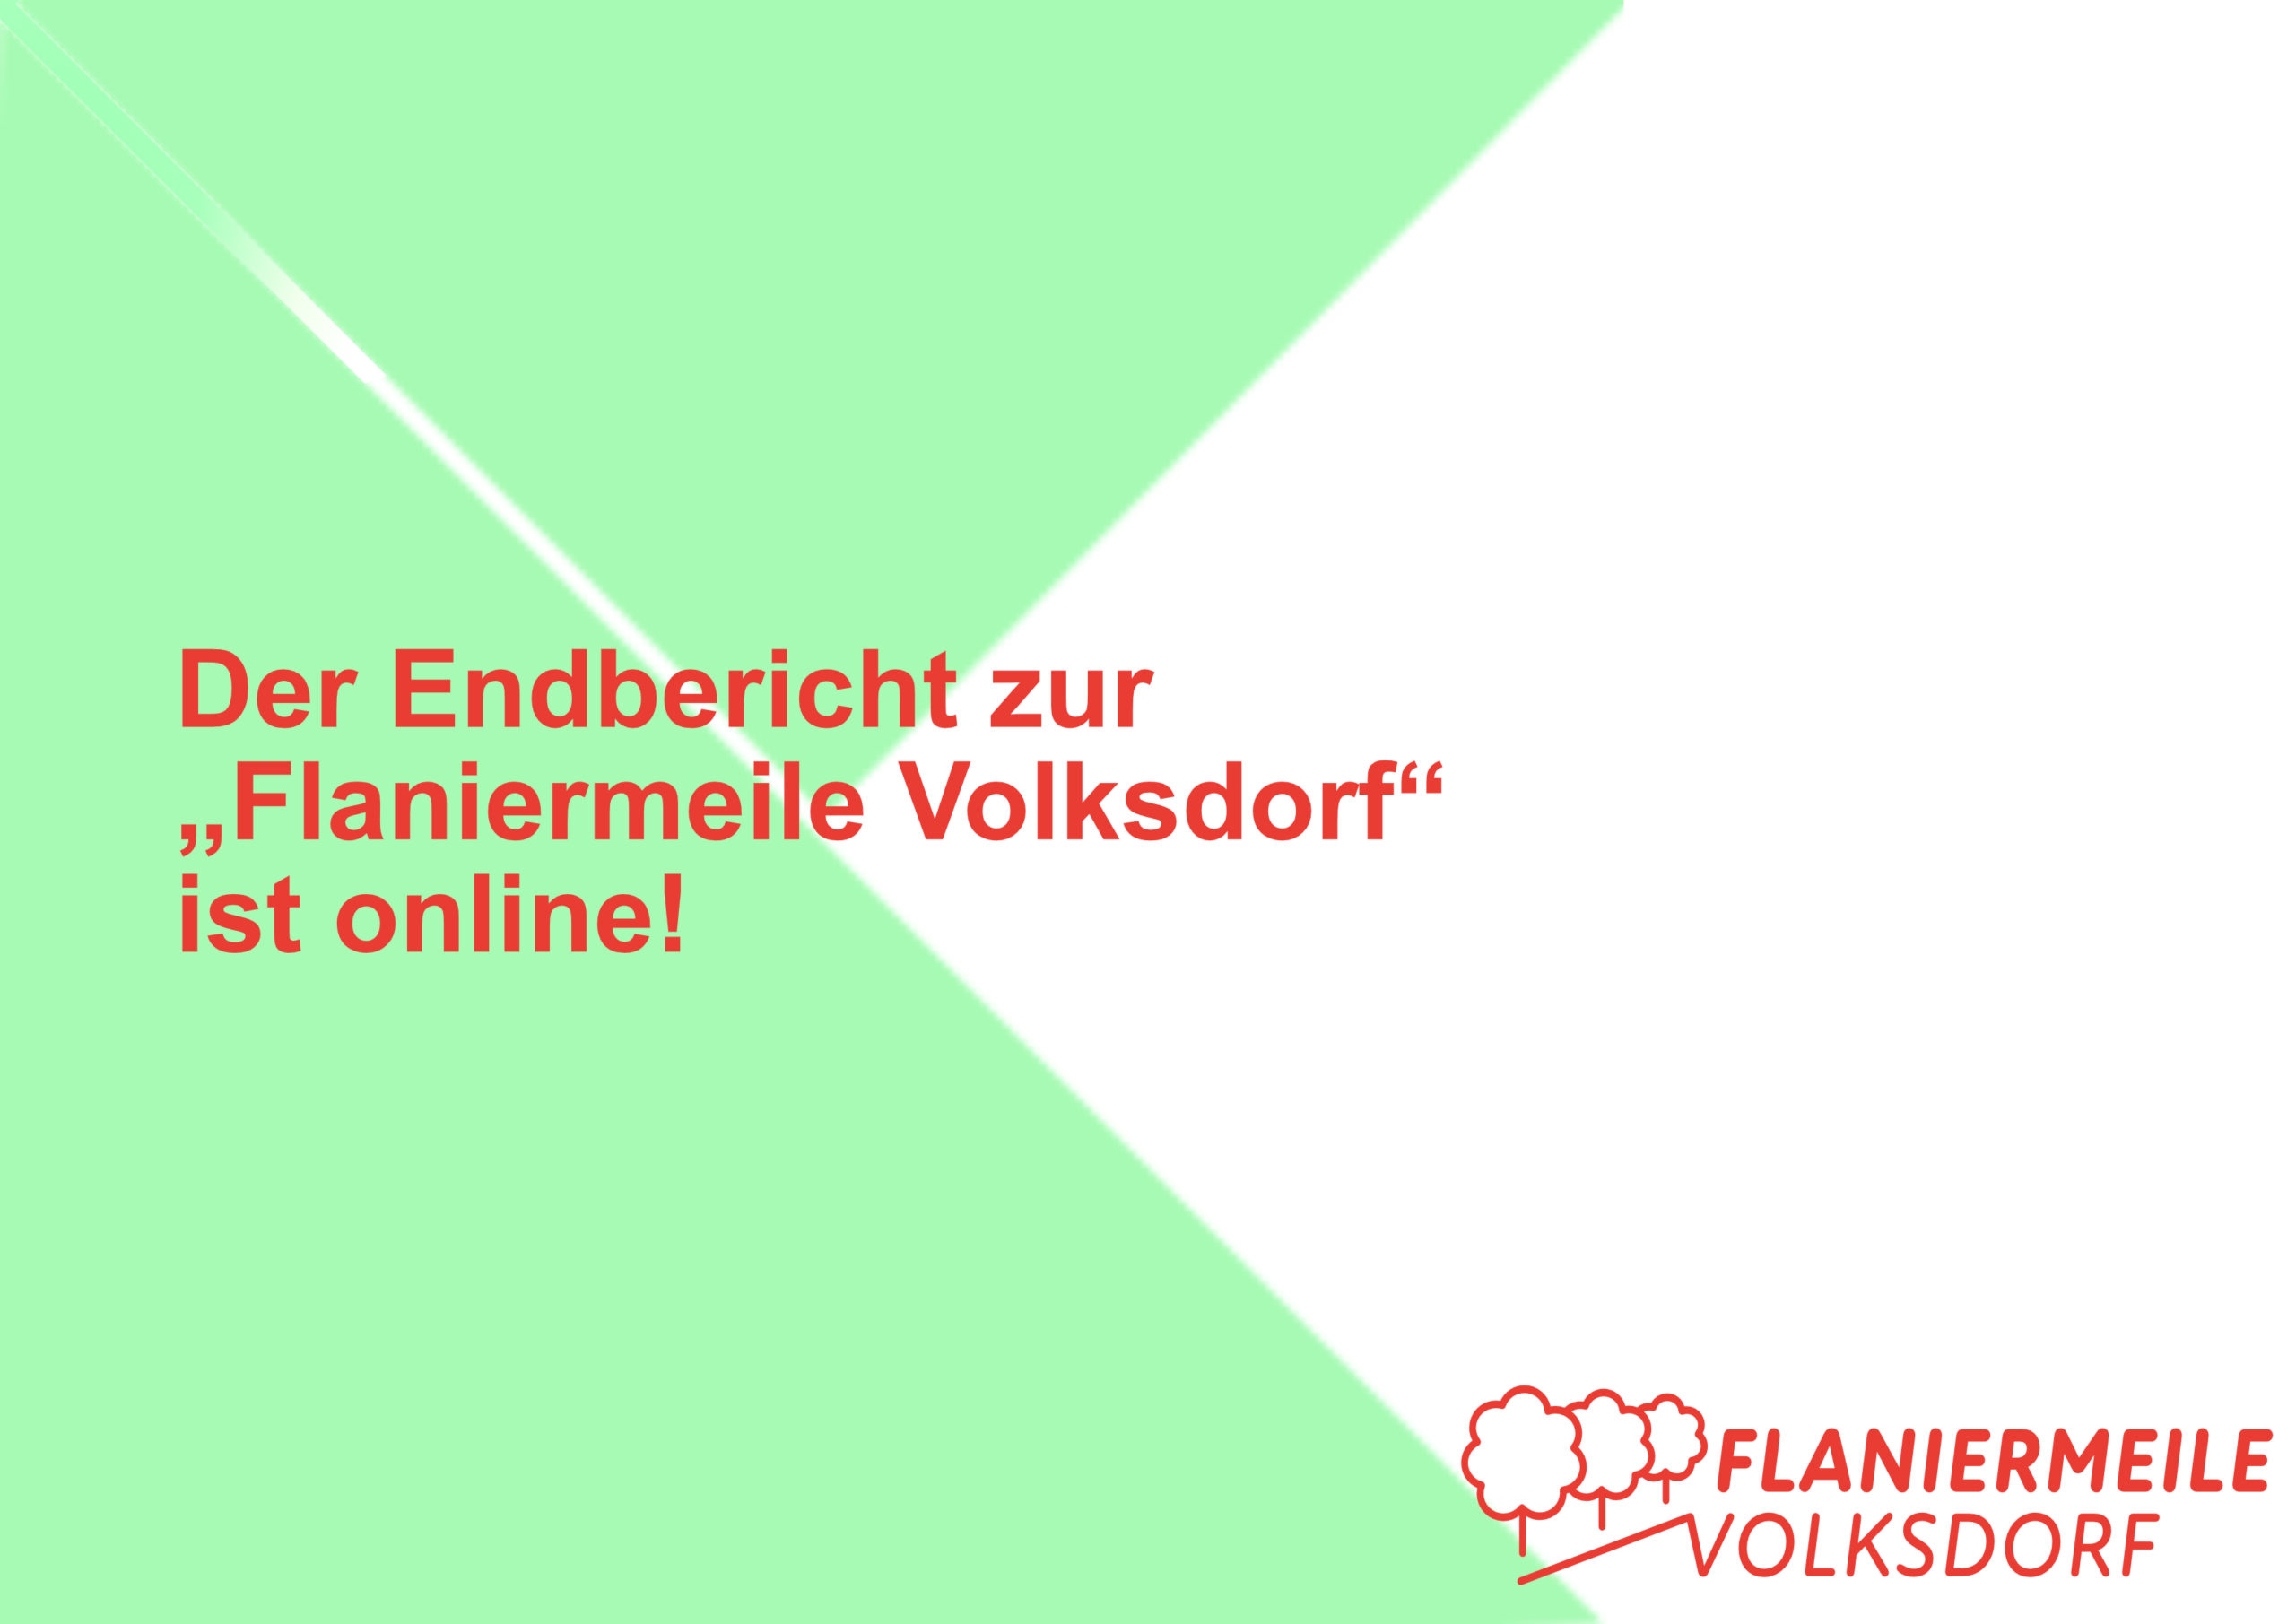 Flaniermeile Volksdorf ist abgeschlossen